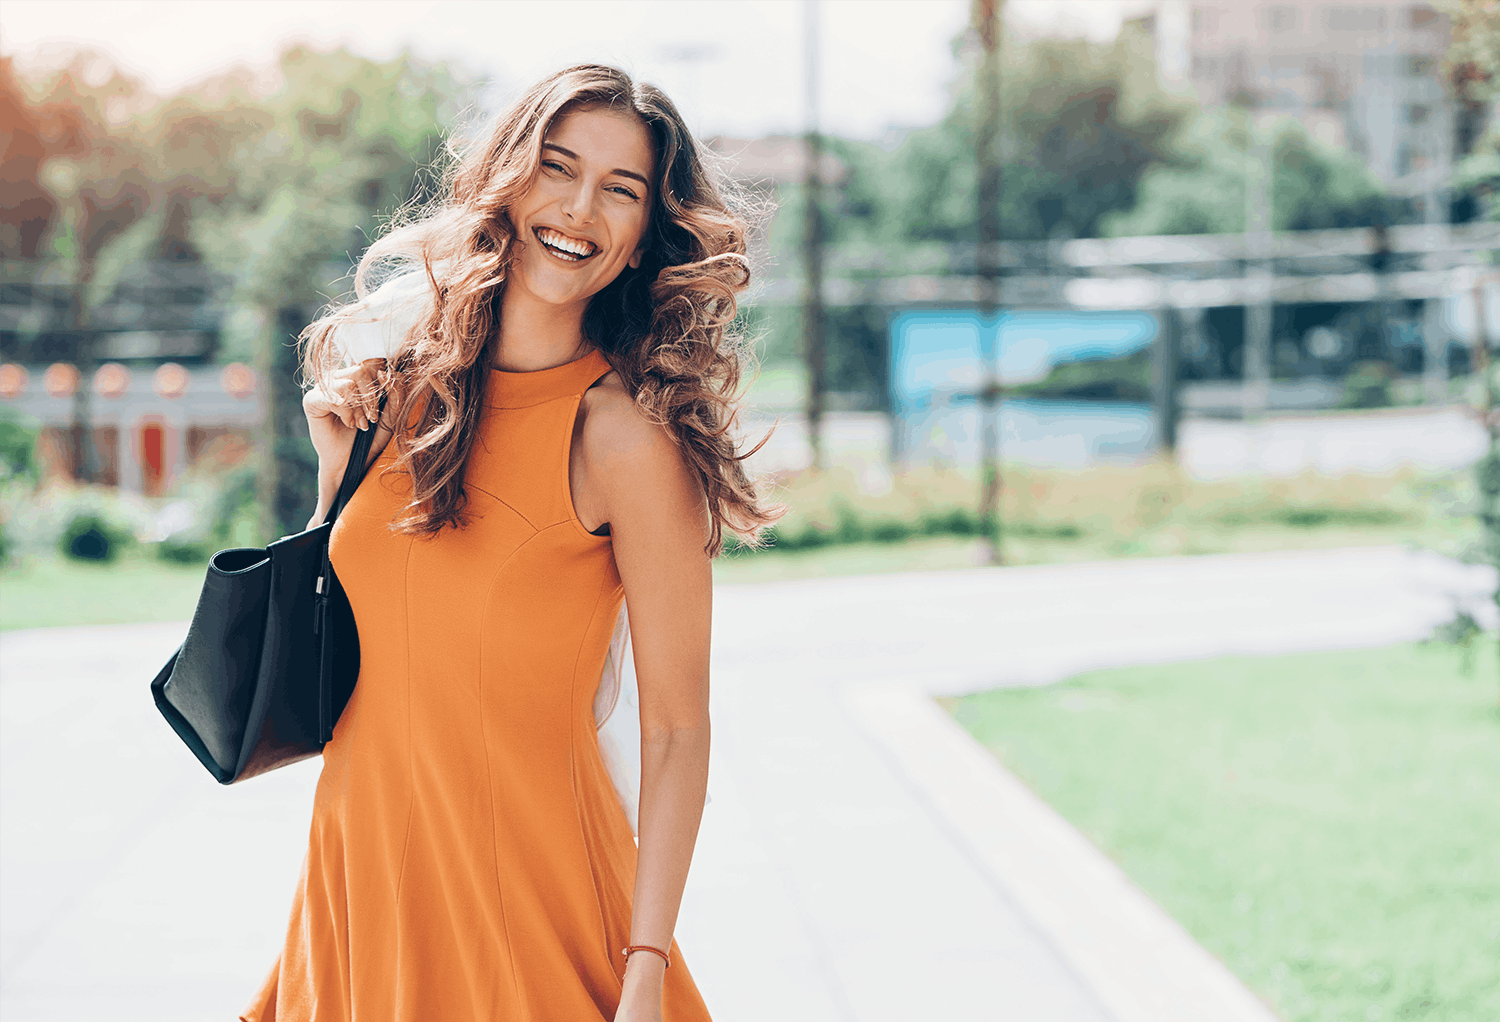 Smiling Woman with Orange Dress